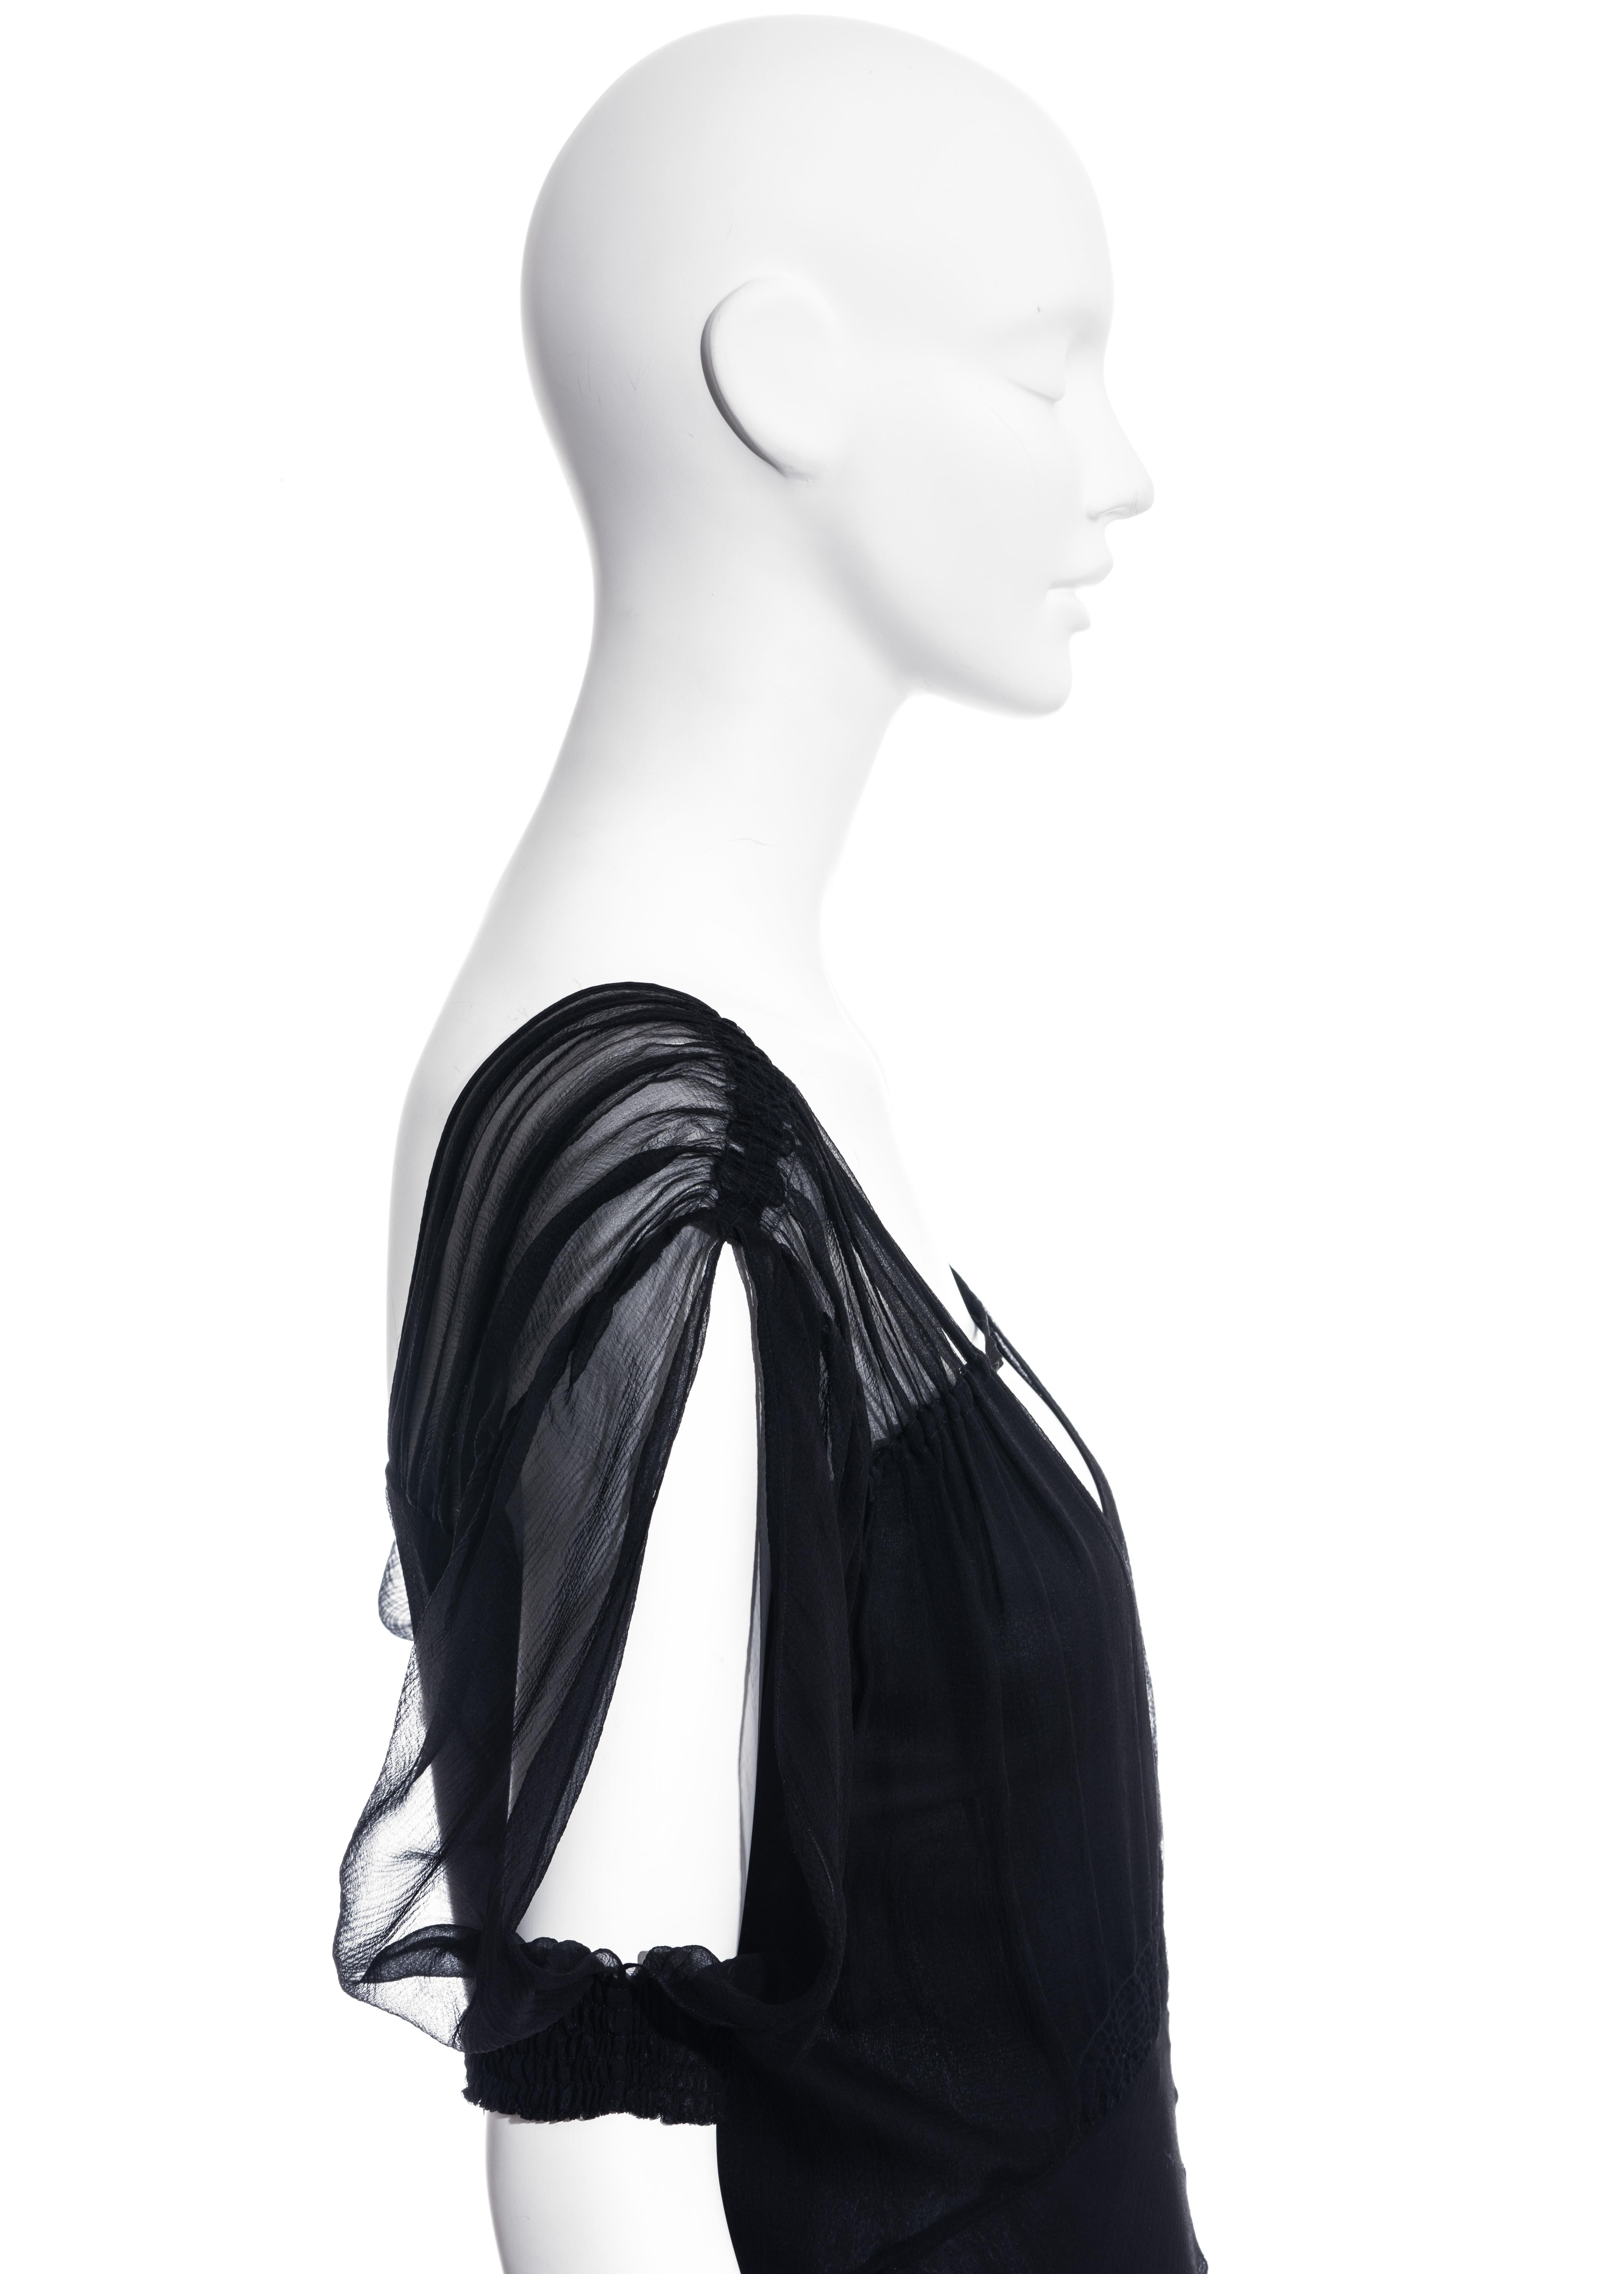 Women's Christian Dior by John Galliano black silk chiffon evening dress, ss 2002